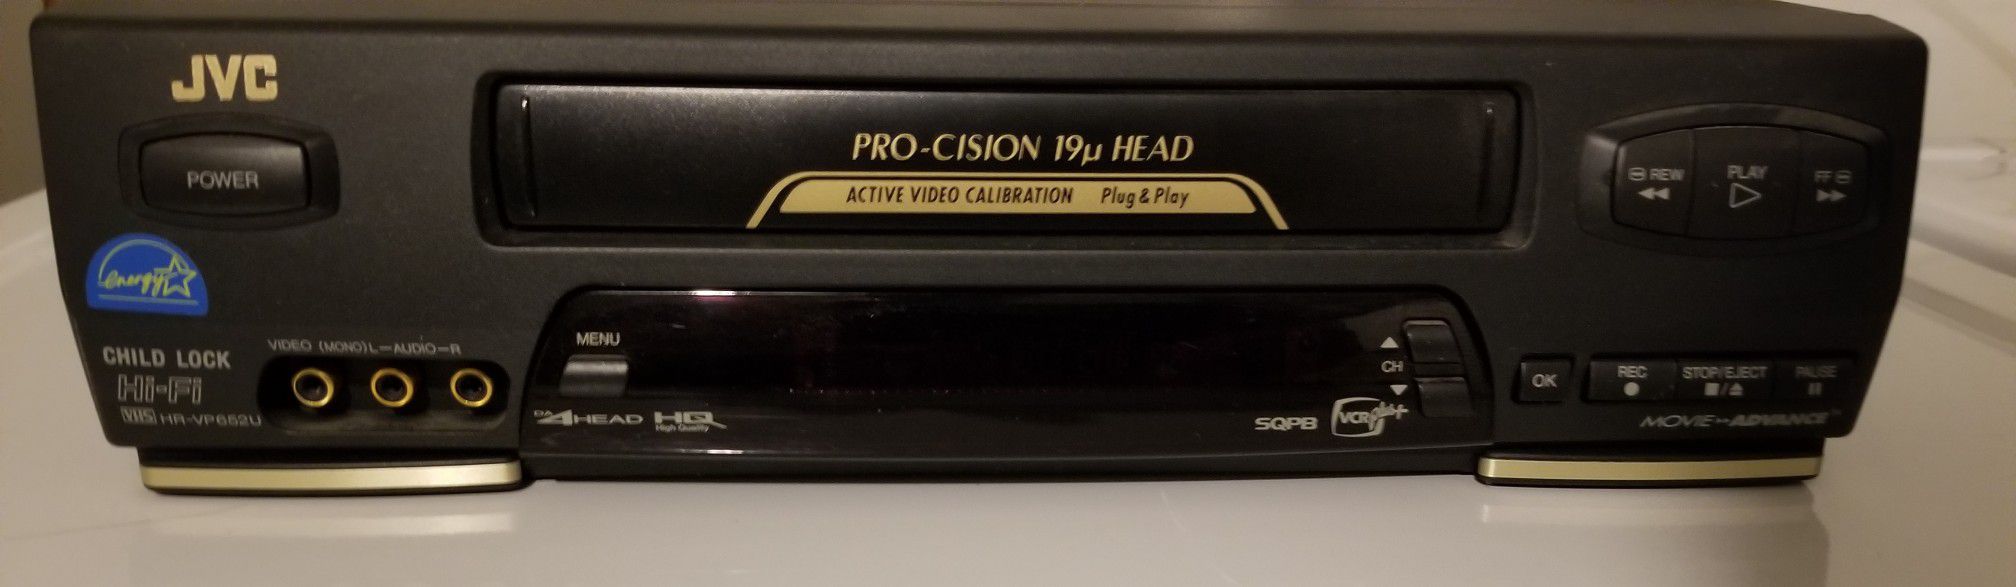 Toshiba DVD Video Player